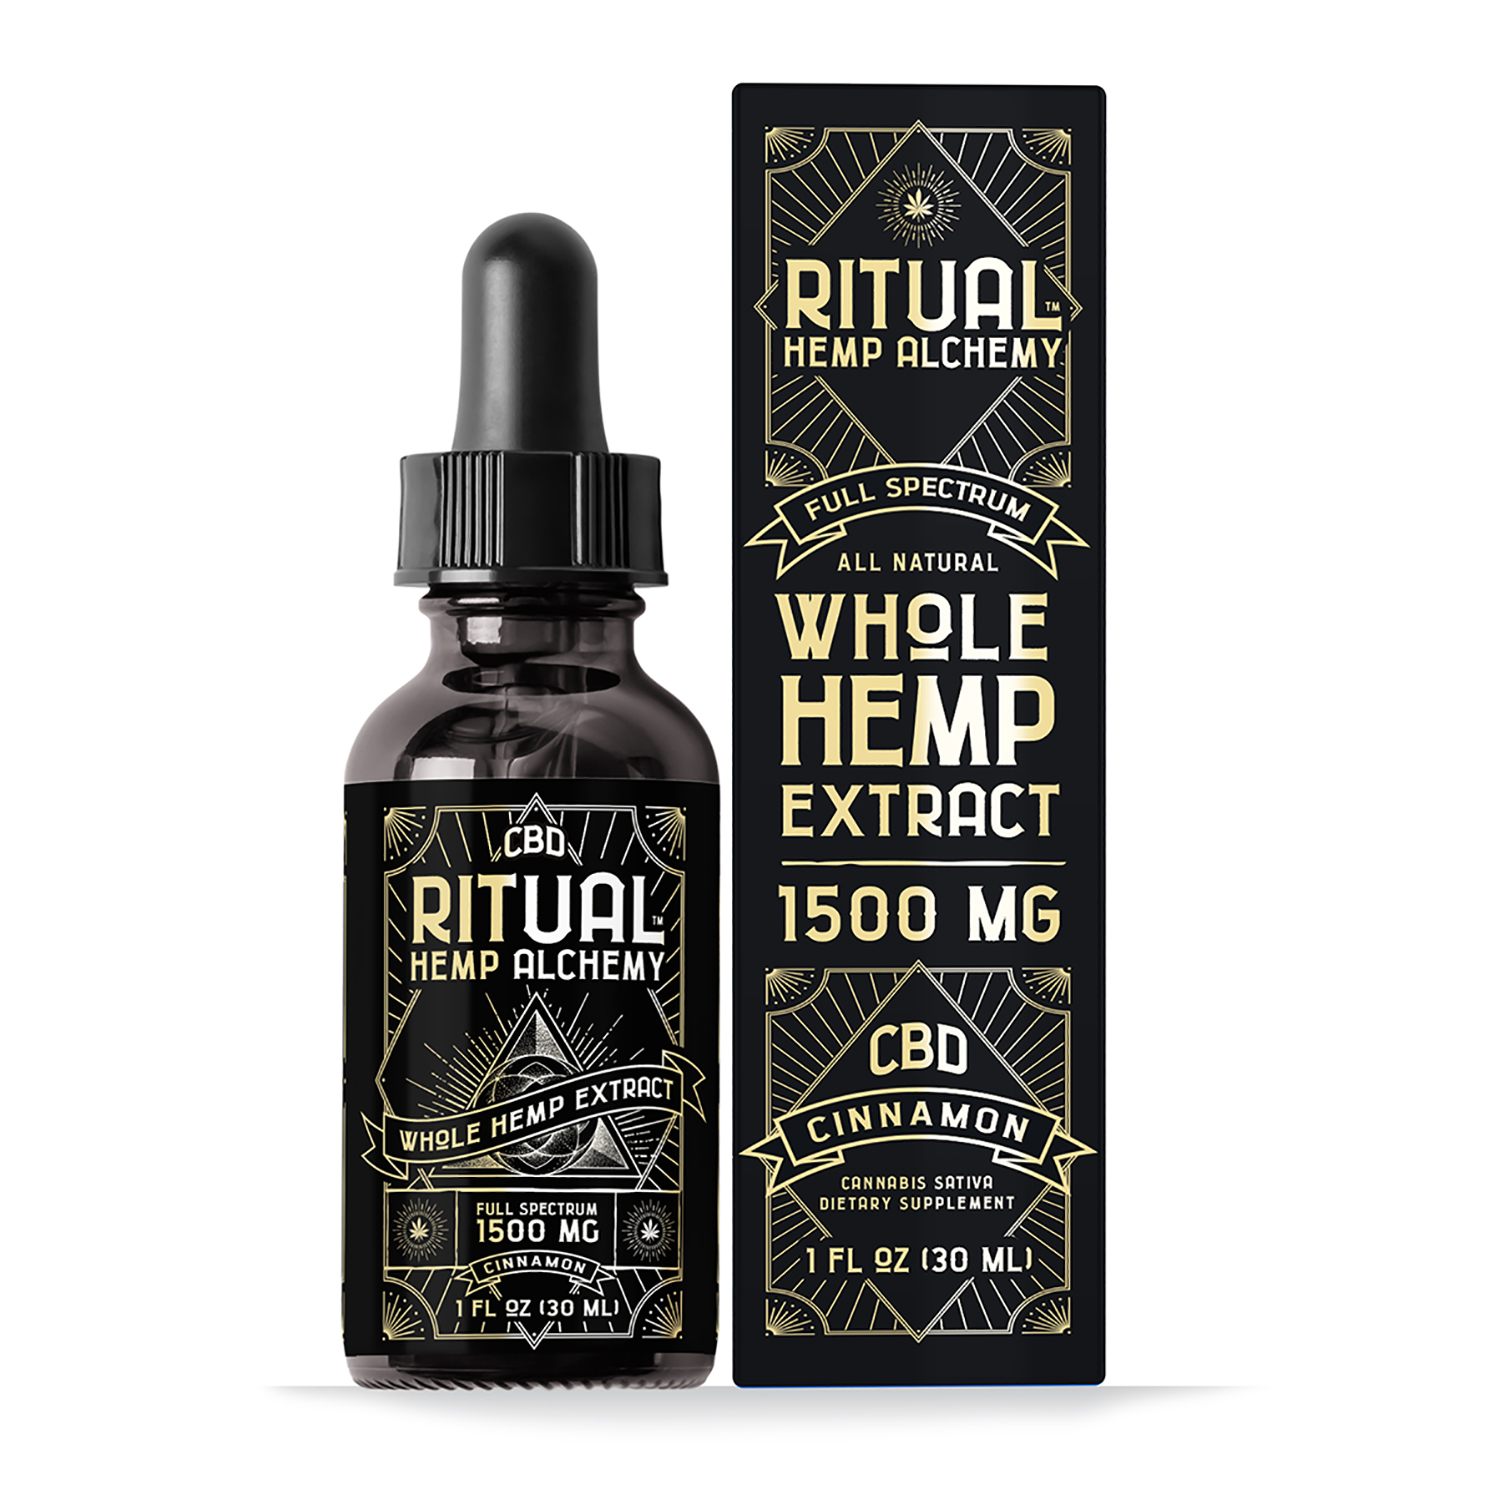 Ritual Hemp Alchemy 1500 mg Full Spectrum Whole Hemp Extract